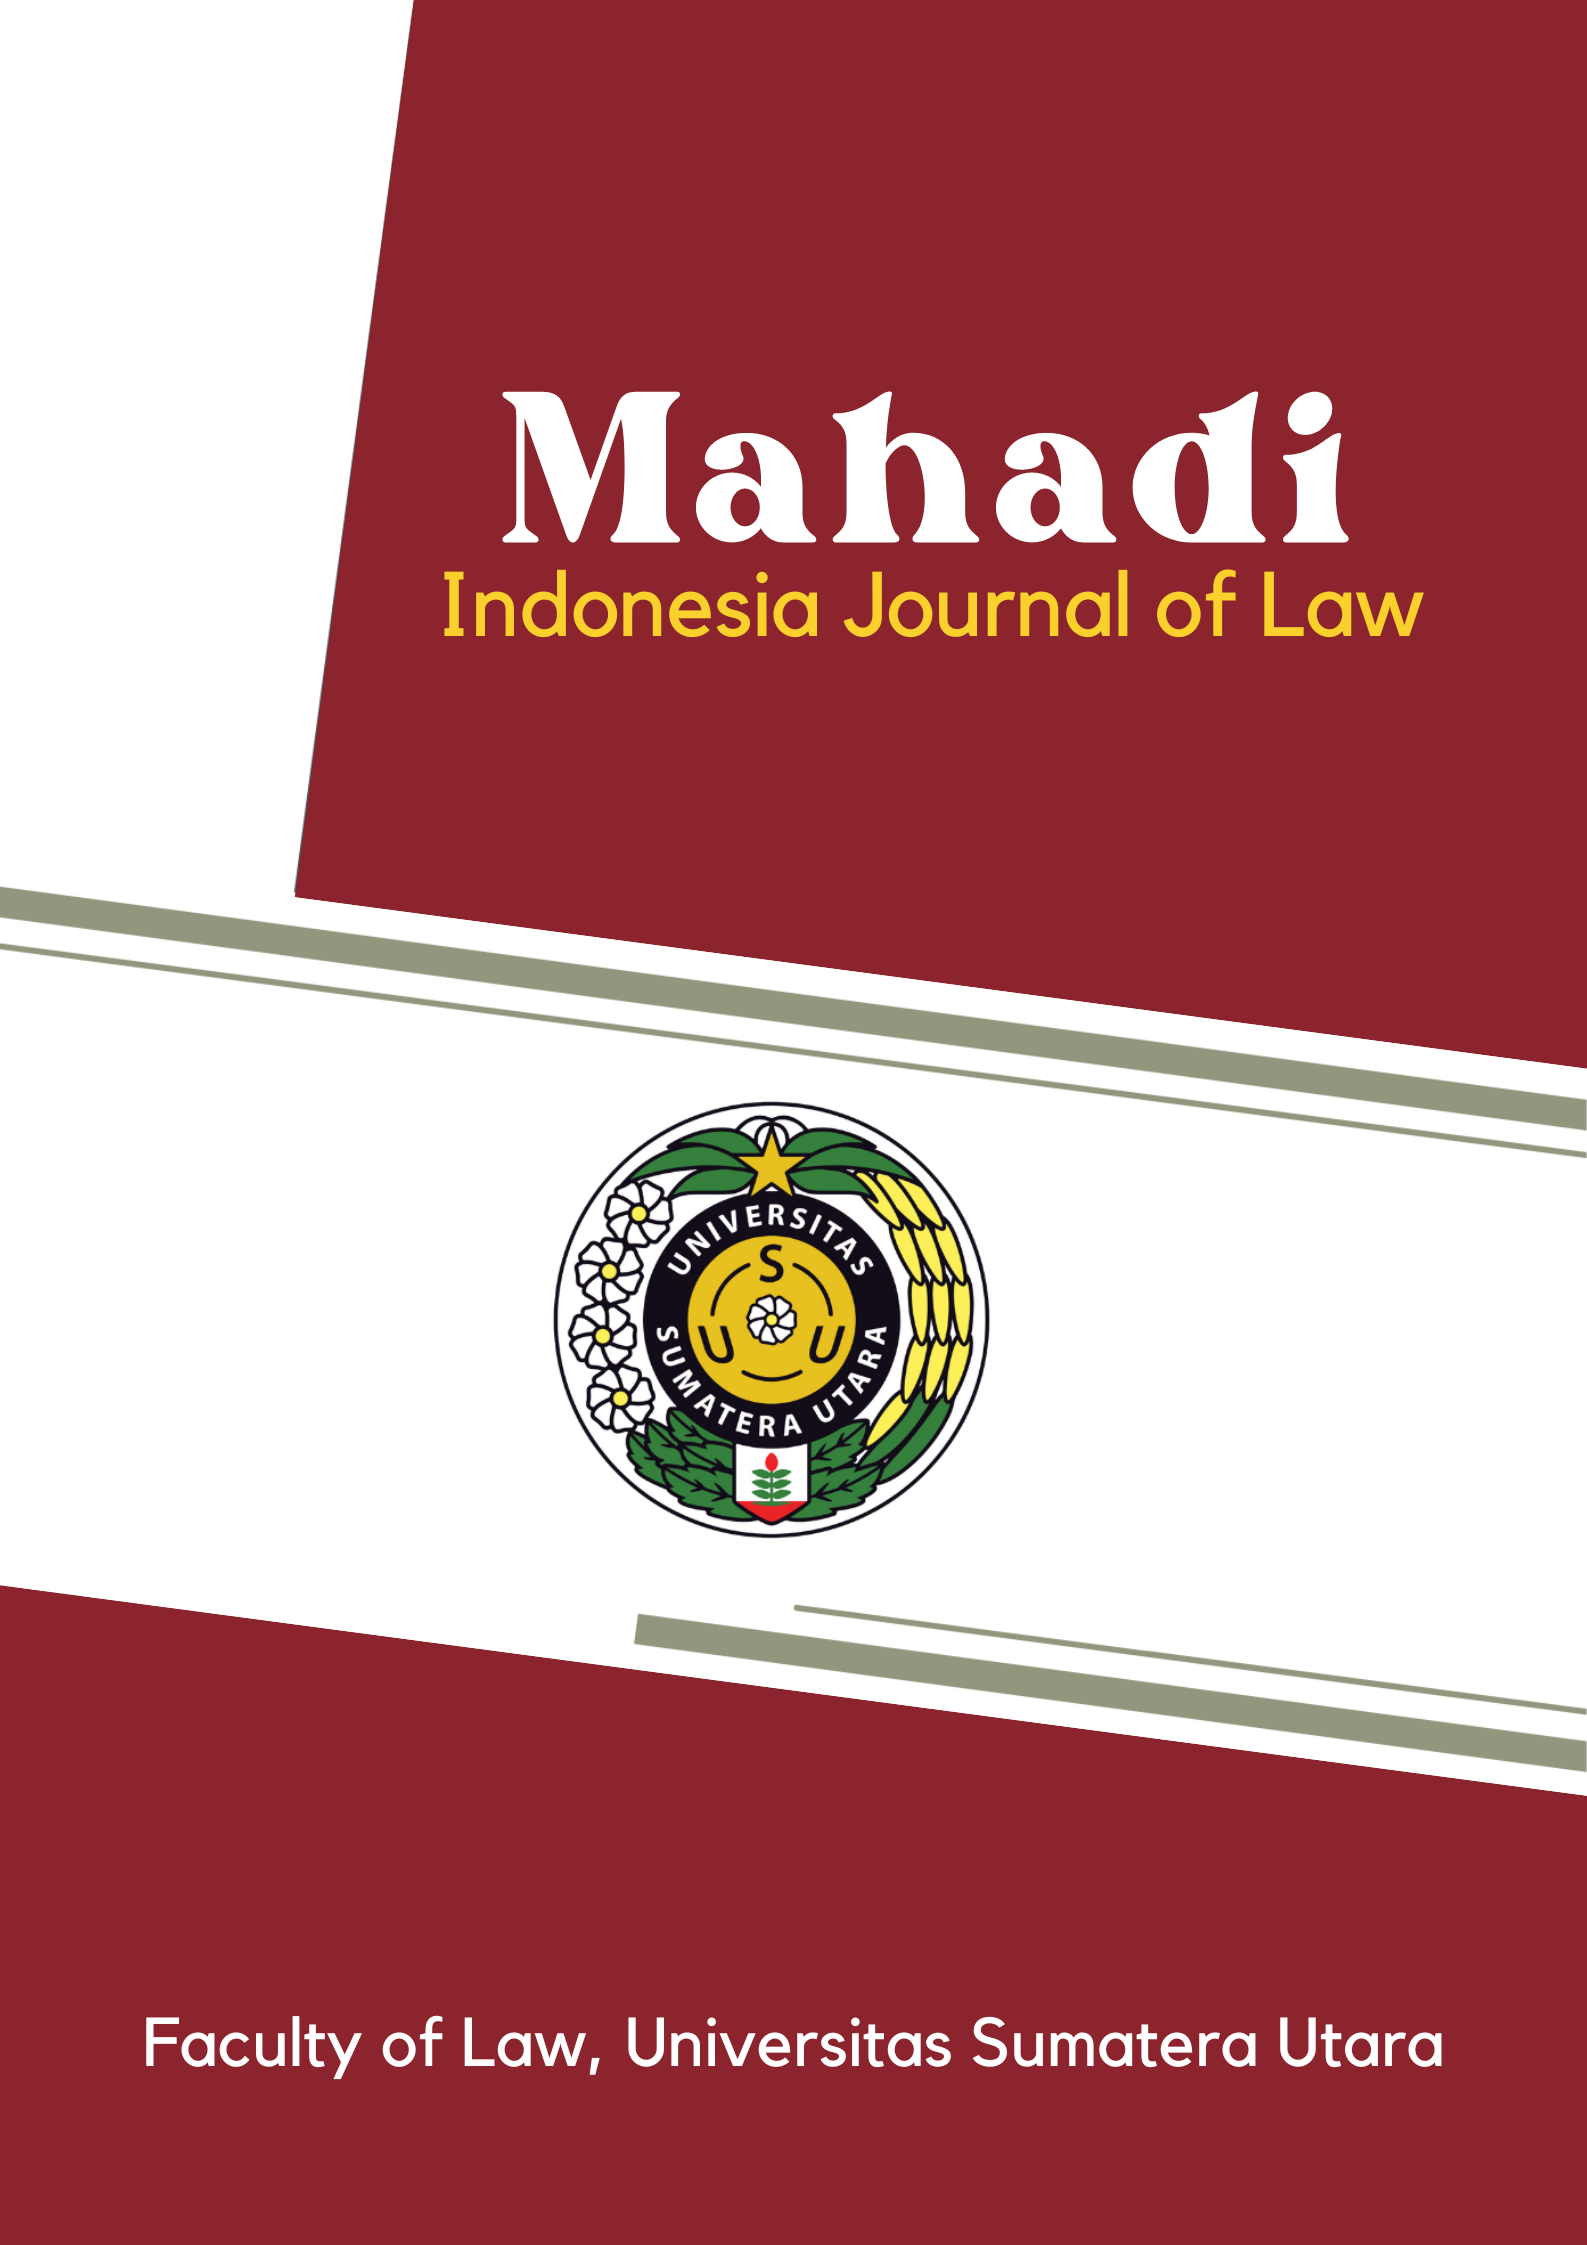 Mahadi Main Cover